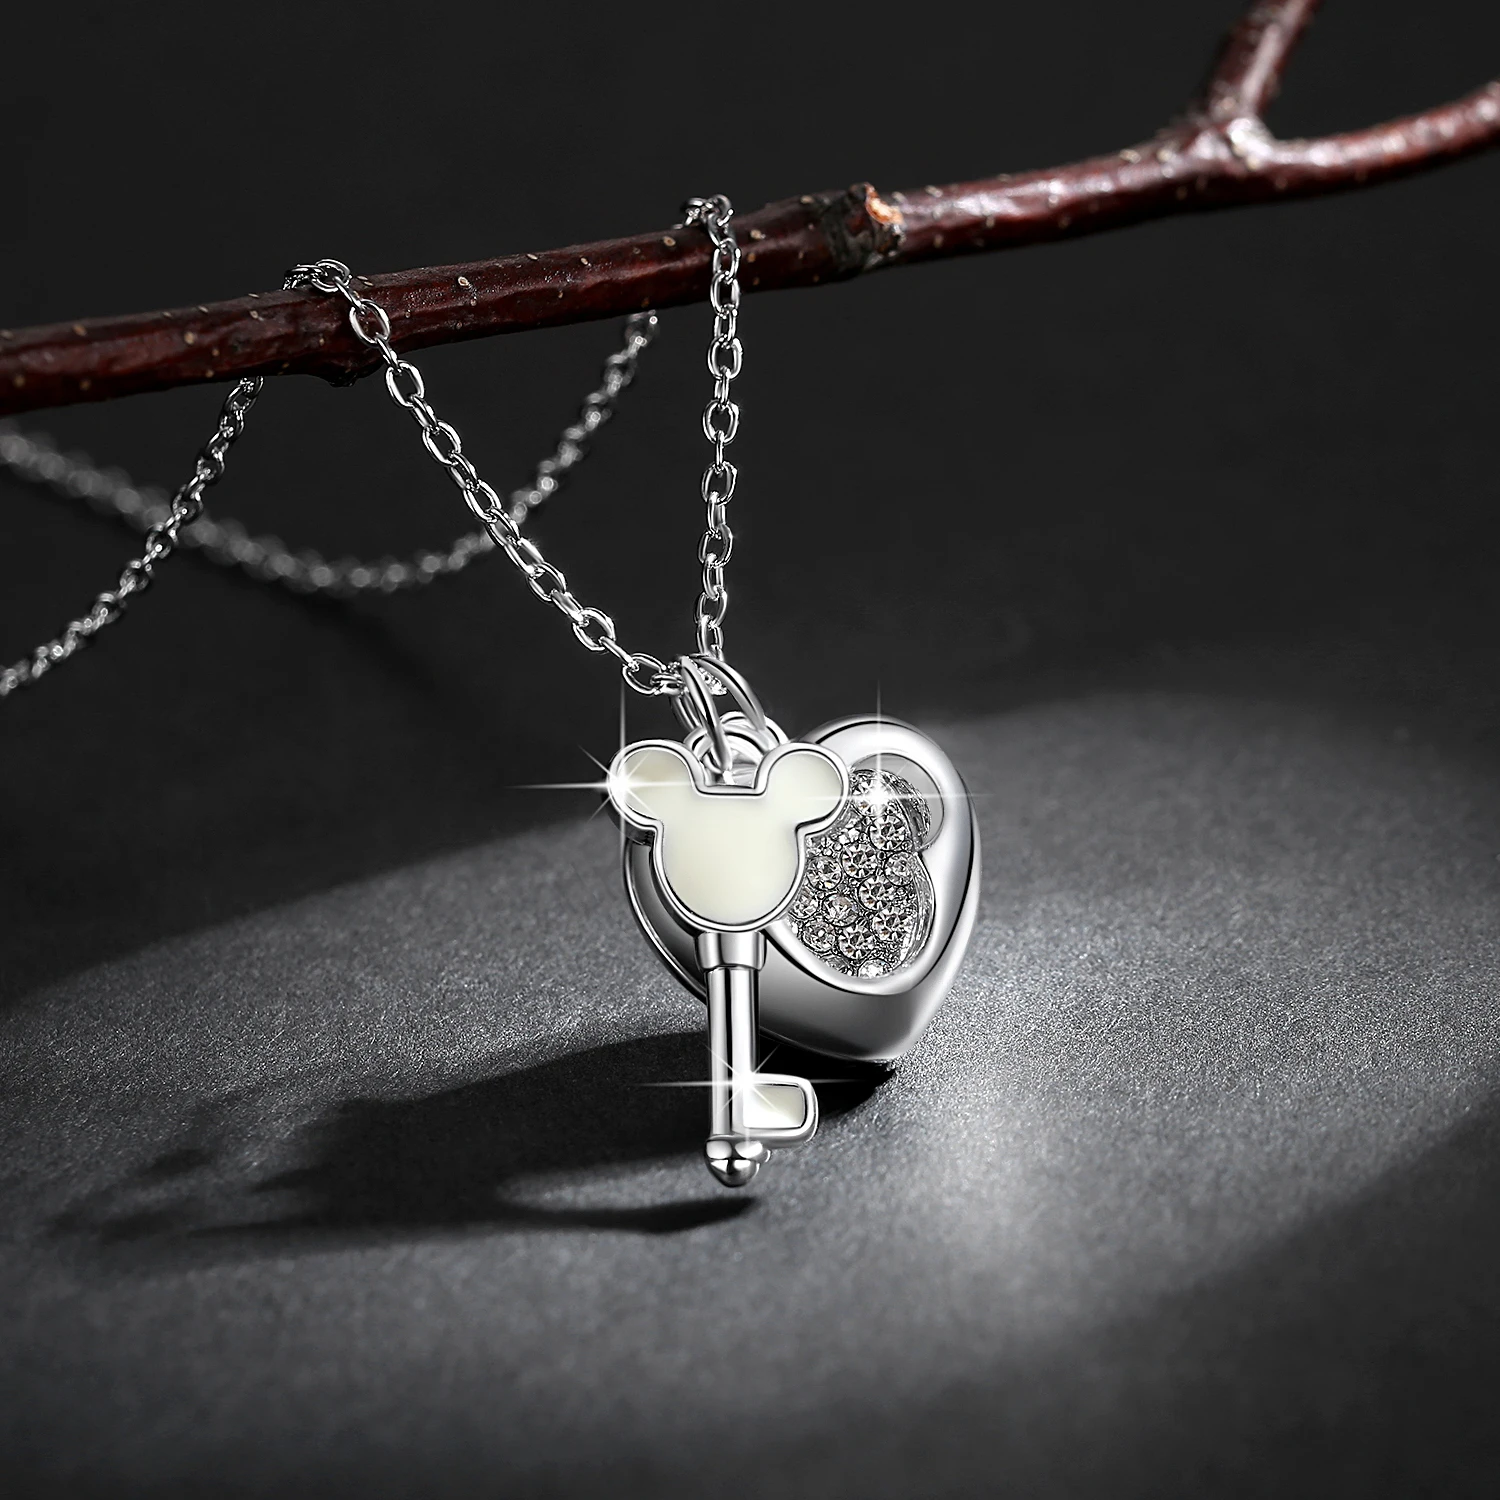 LOYE Love Heart Micky Key кулон ожерелье Блестящий Кристалл Циркон ключицы цепи ожерелье s для женщин девушек Ювелирное Украшение на день рождения - Окраска металла: Silver